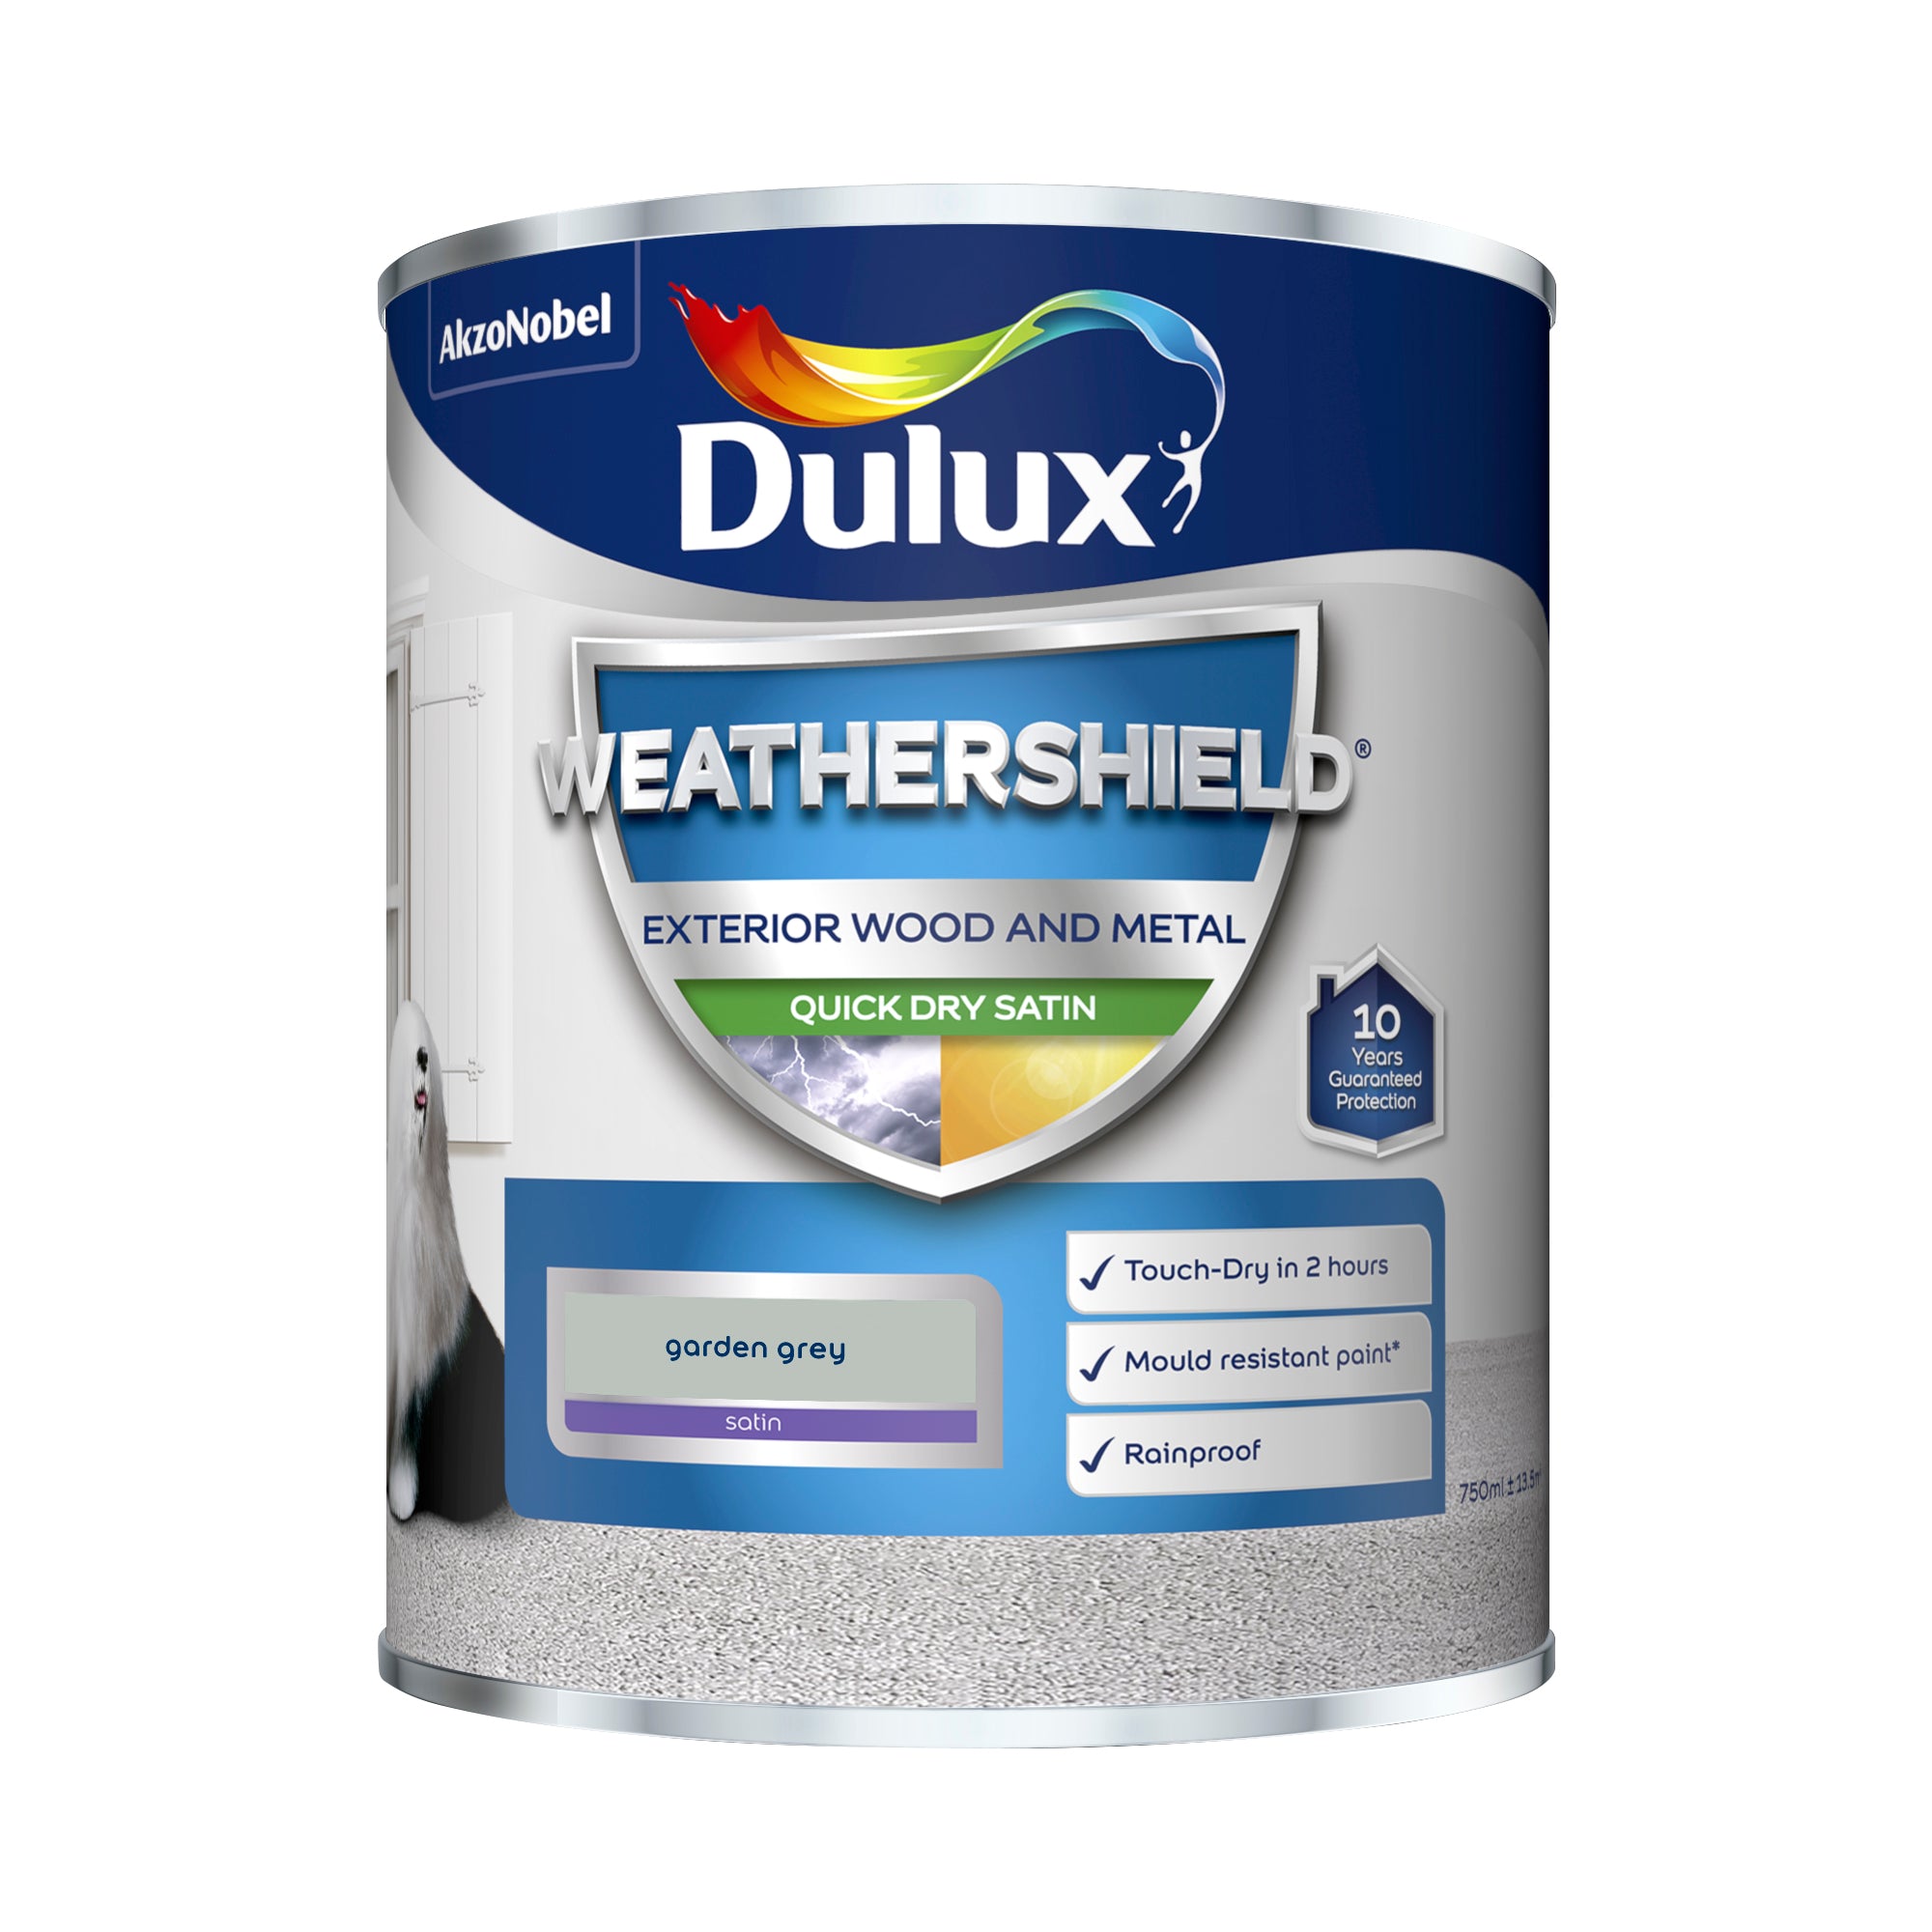 Dulux Weathershield Quick Dry Satin Garden Grey 750ml